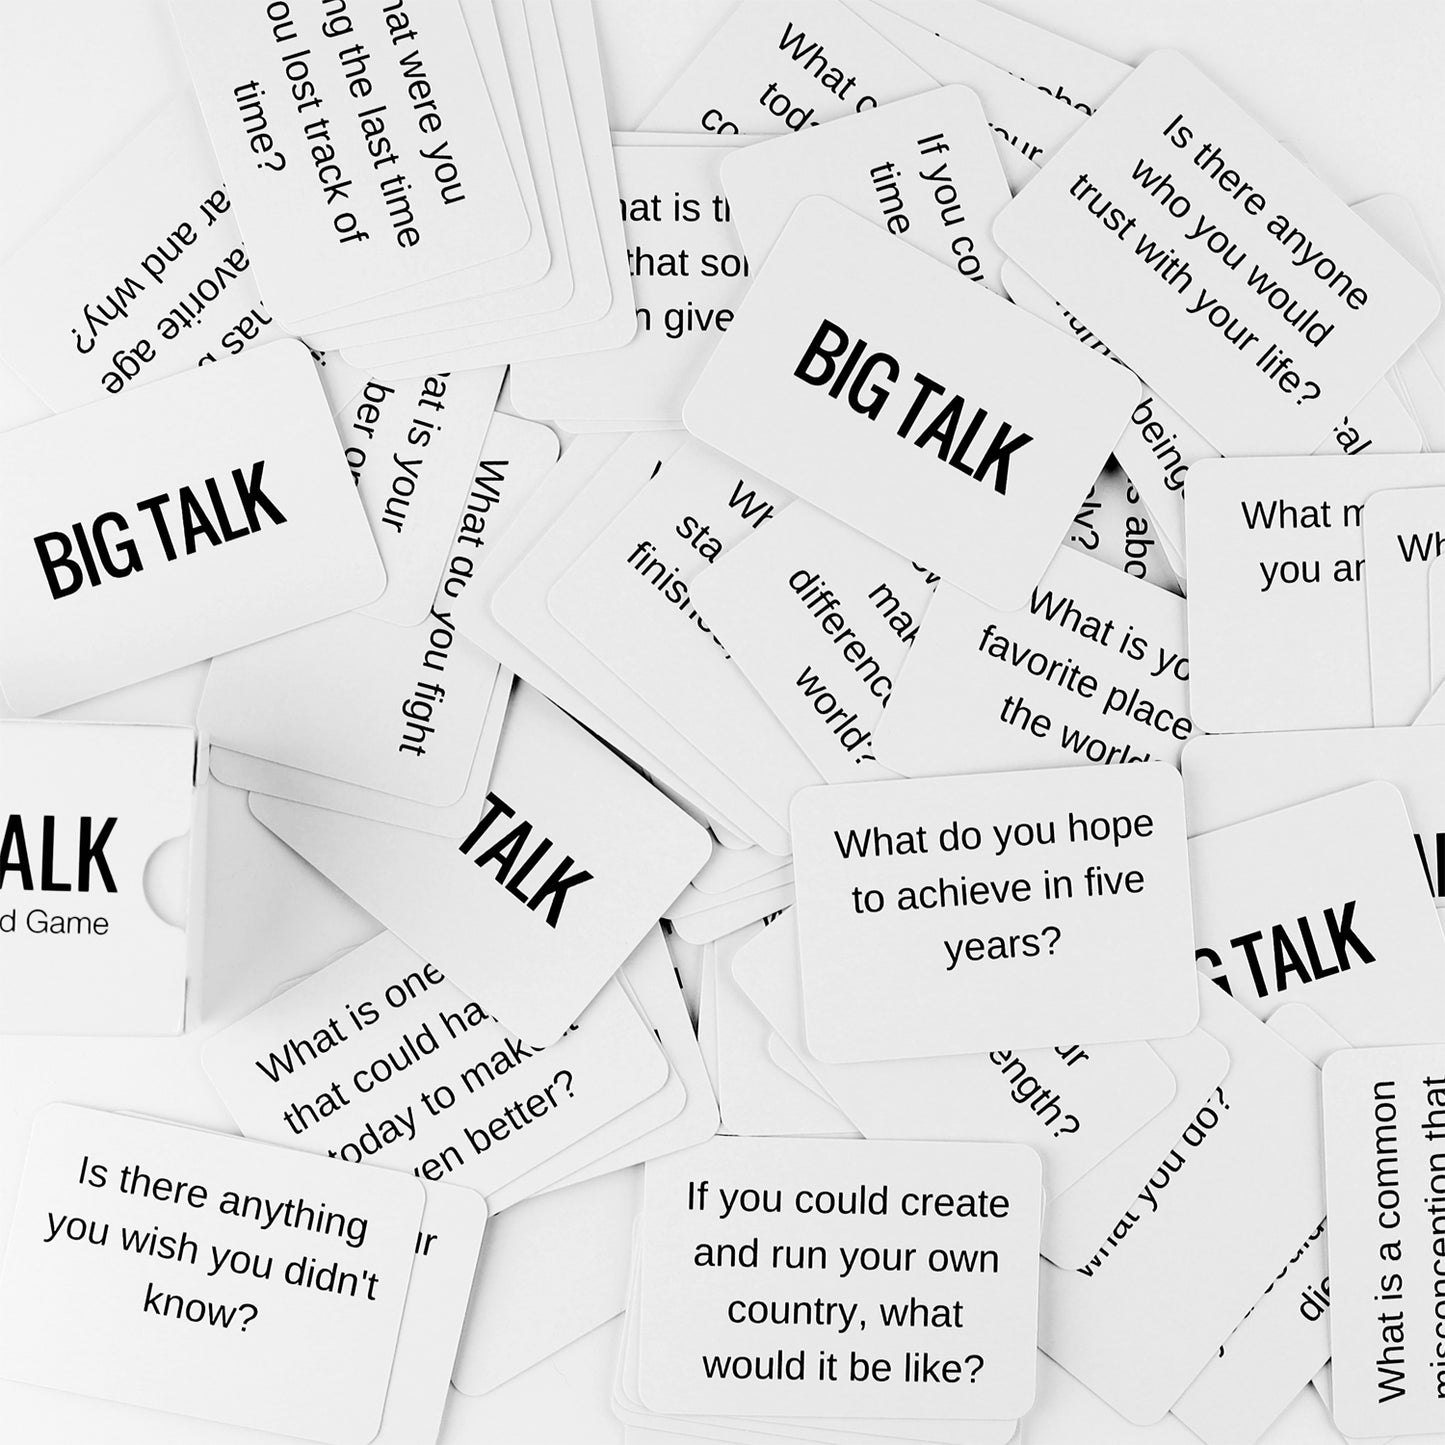 THE ORIGINAL BIG TALK QUESTION CARD GAME